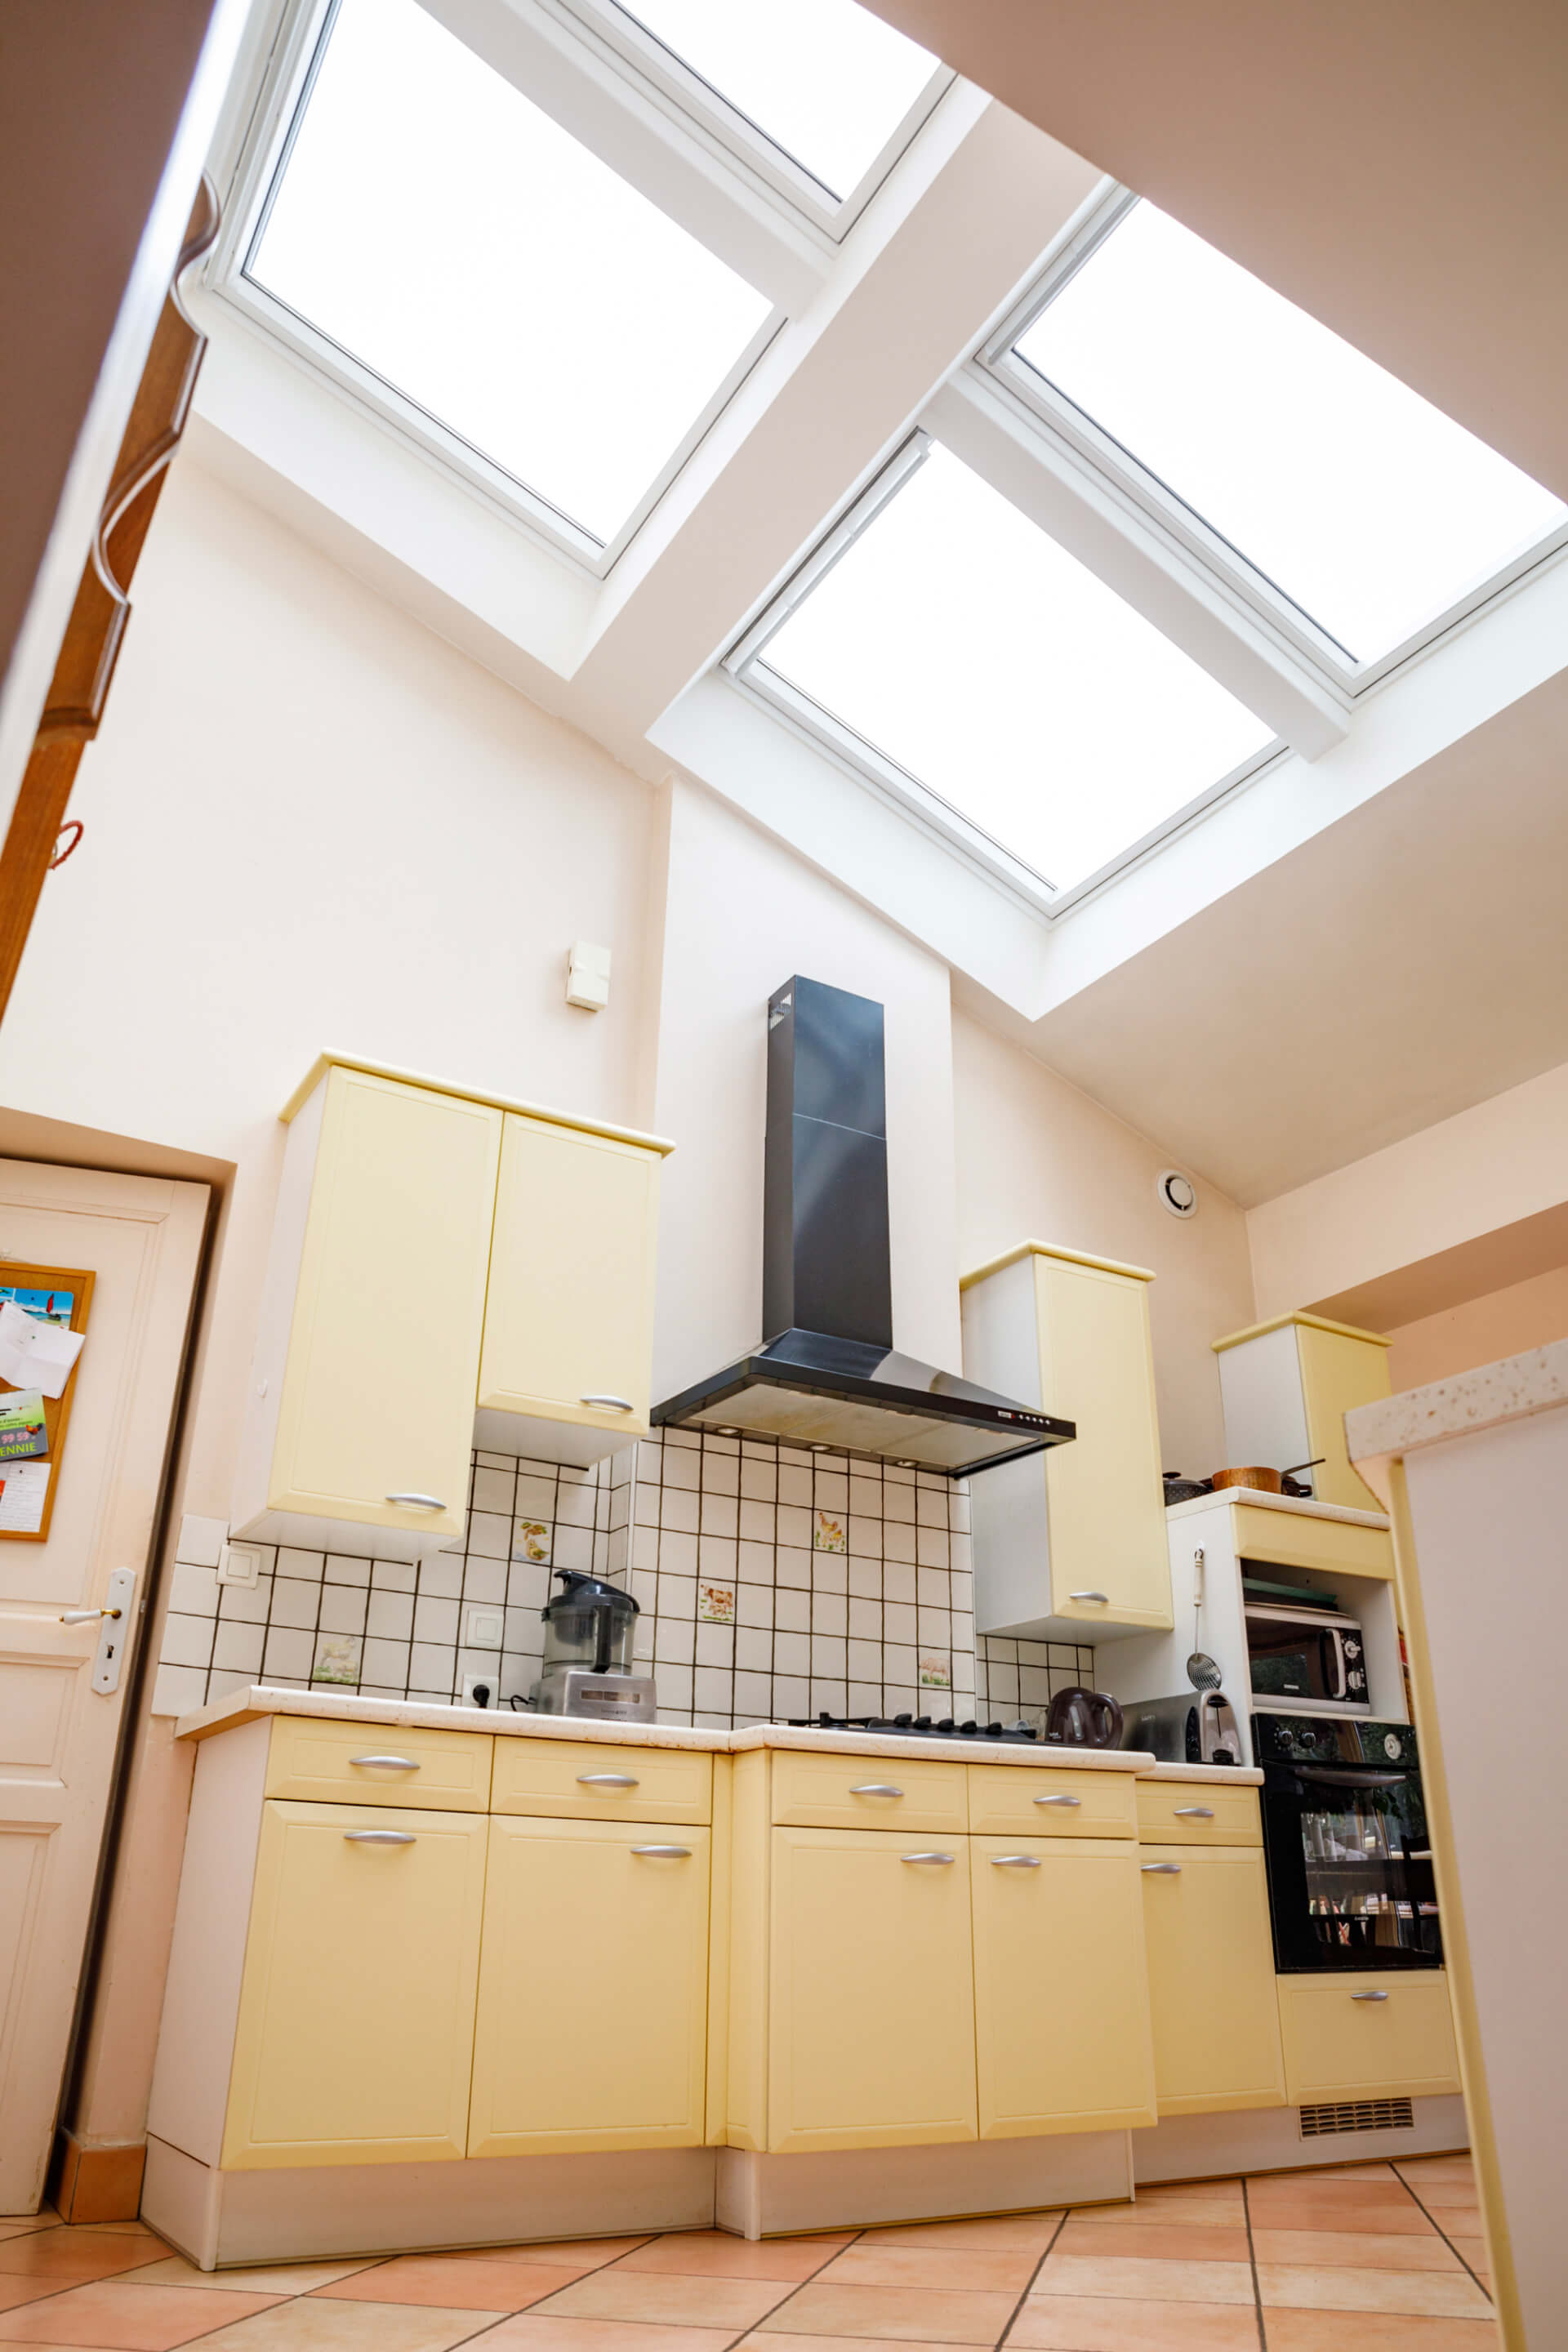 Bright kitchen interior with roof windows